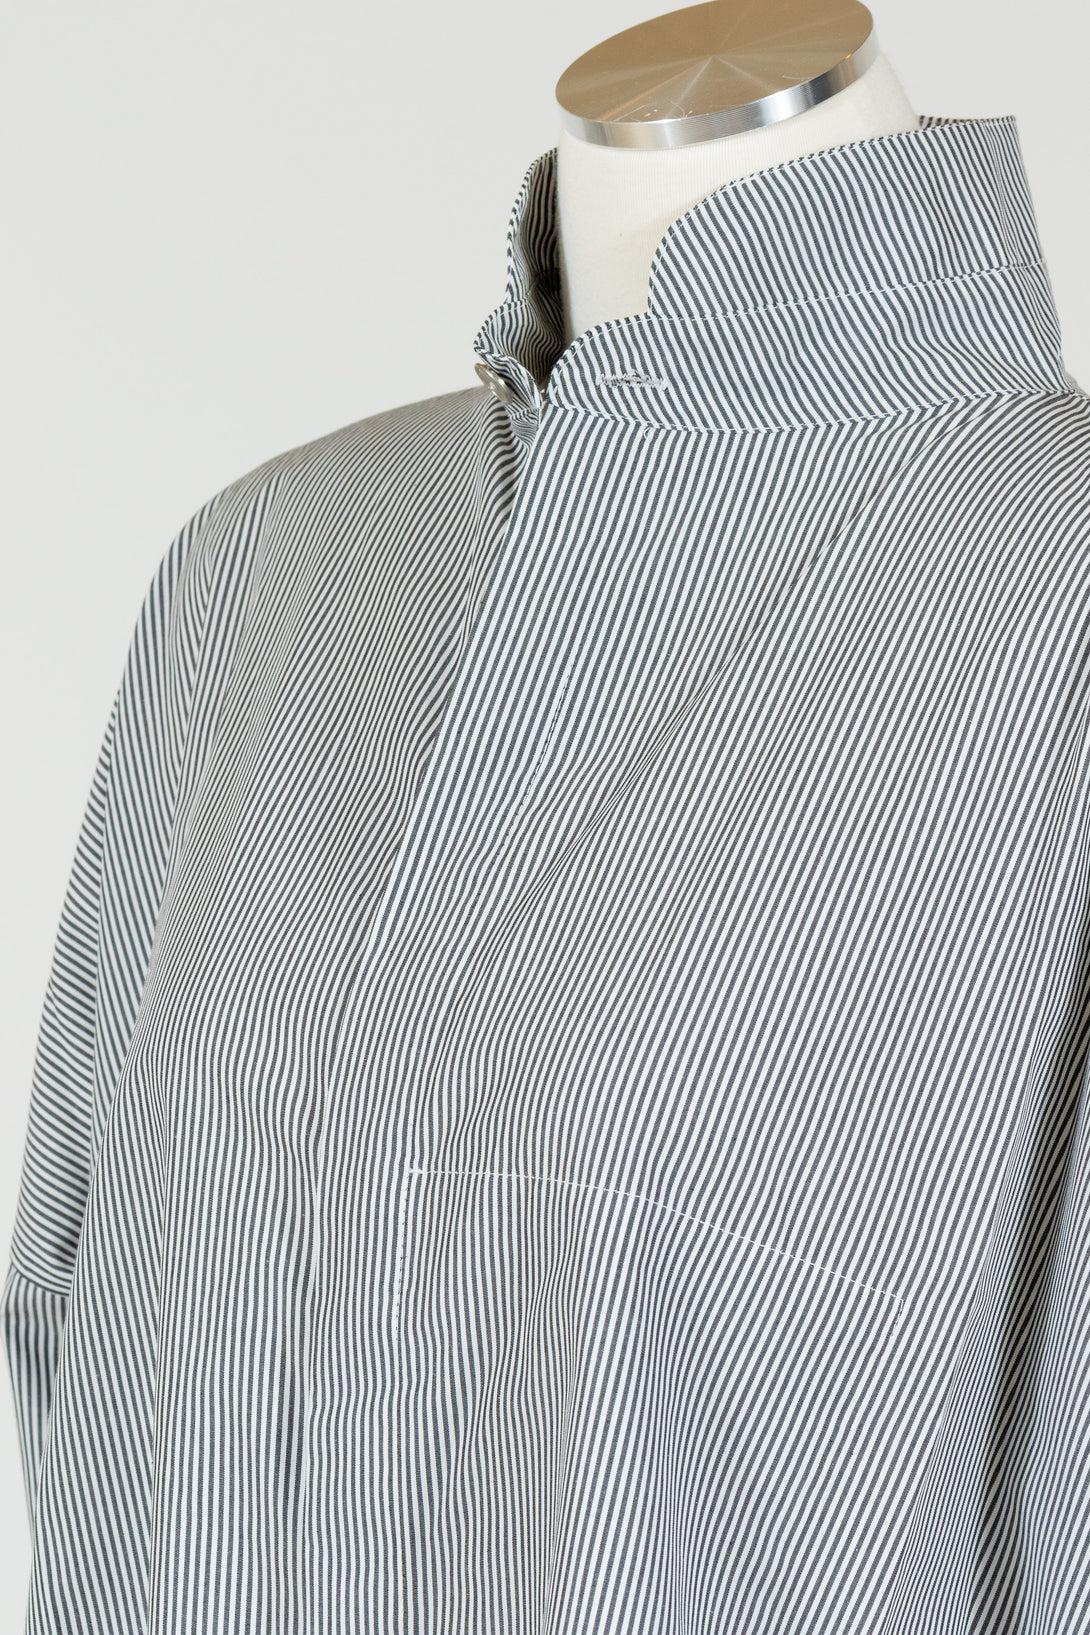 Planet-LaurenG-Signature-Shirt-Stripe